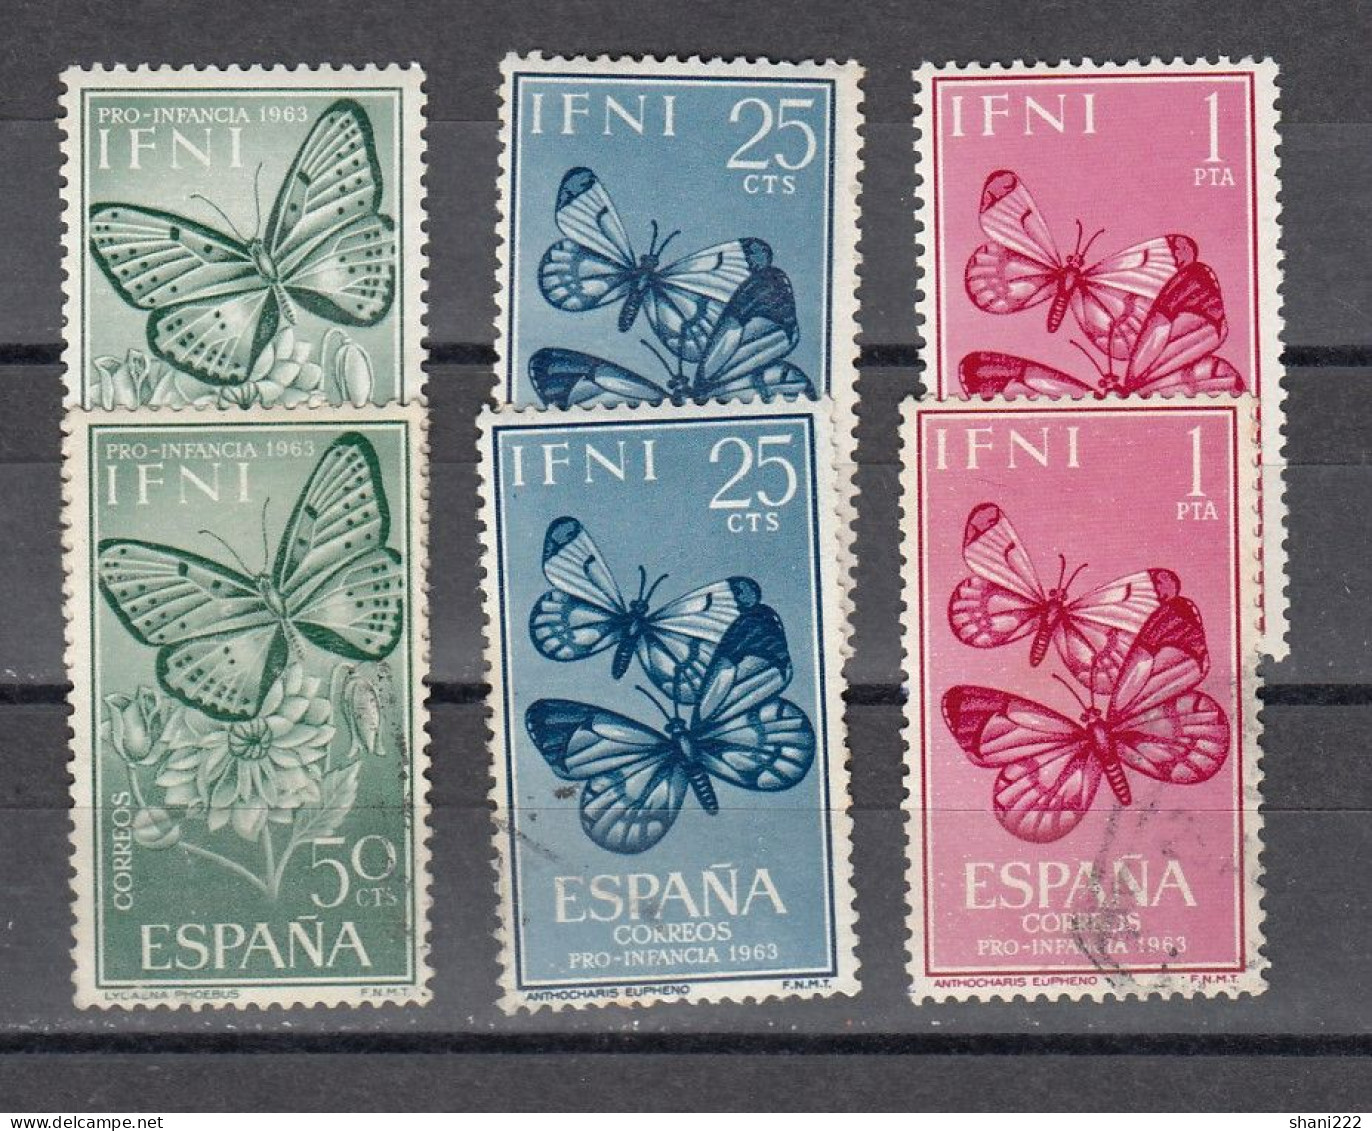 Ifni - 1963 - Butterflies MNH  And Used Sets (e-834) - Ifni